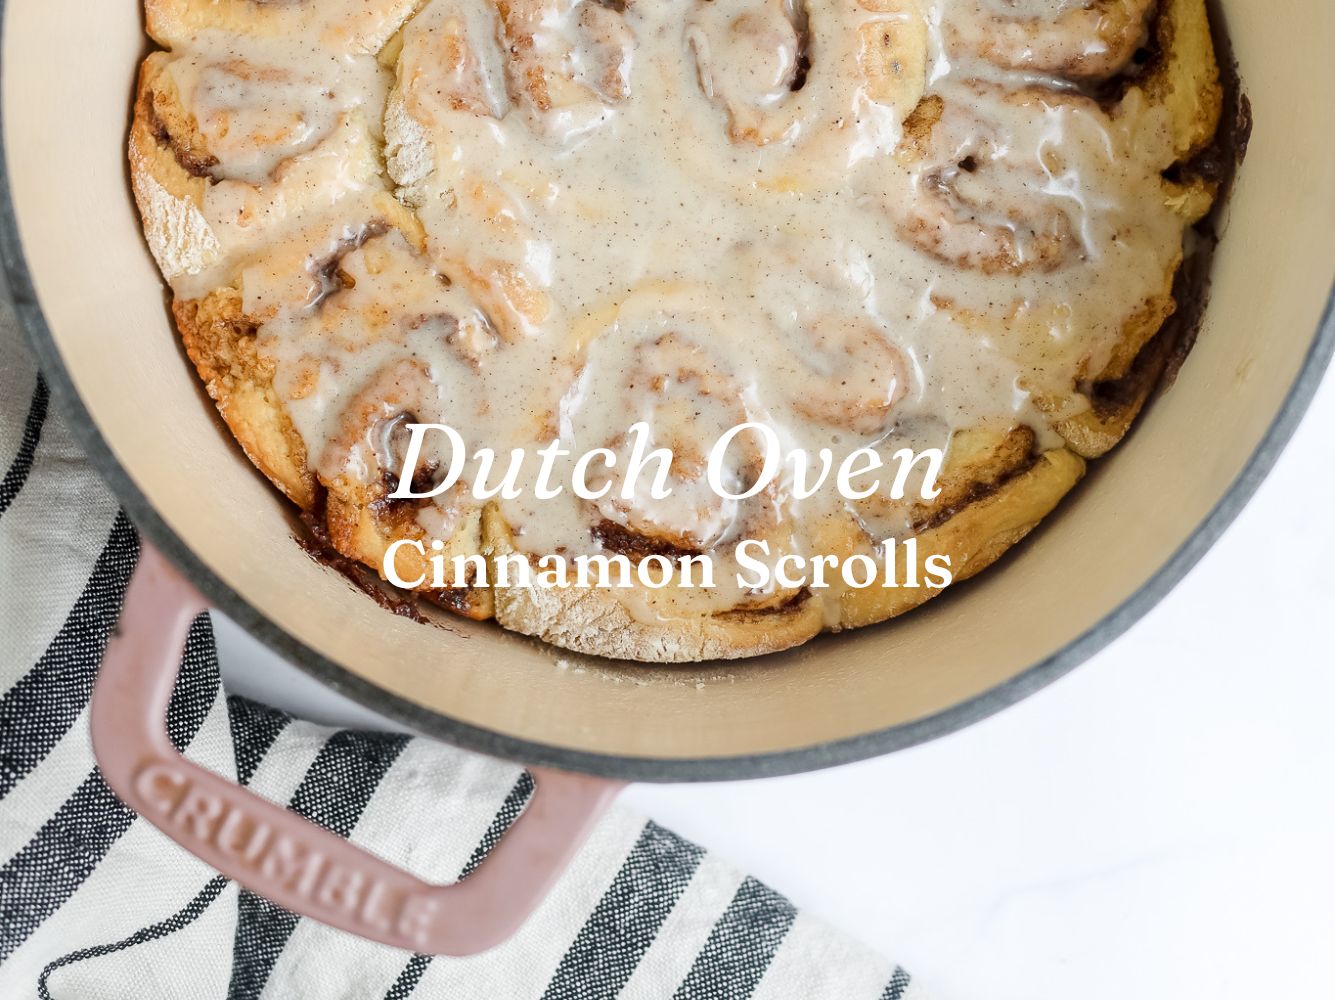 Dutch Oven Cinnamon Rolls